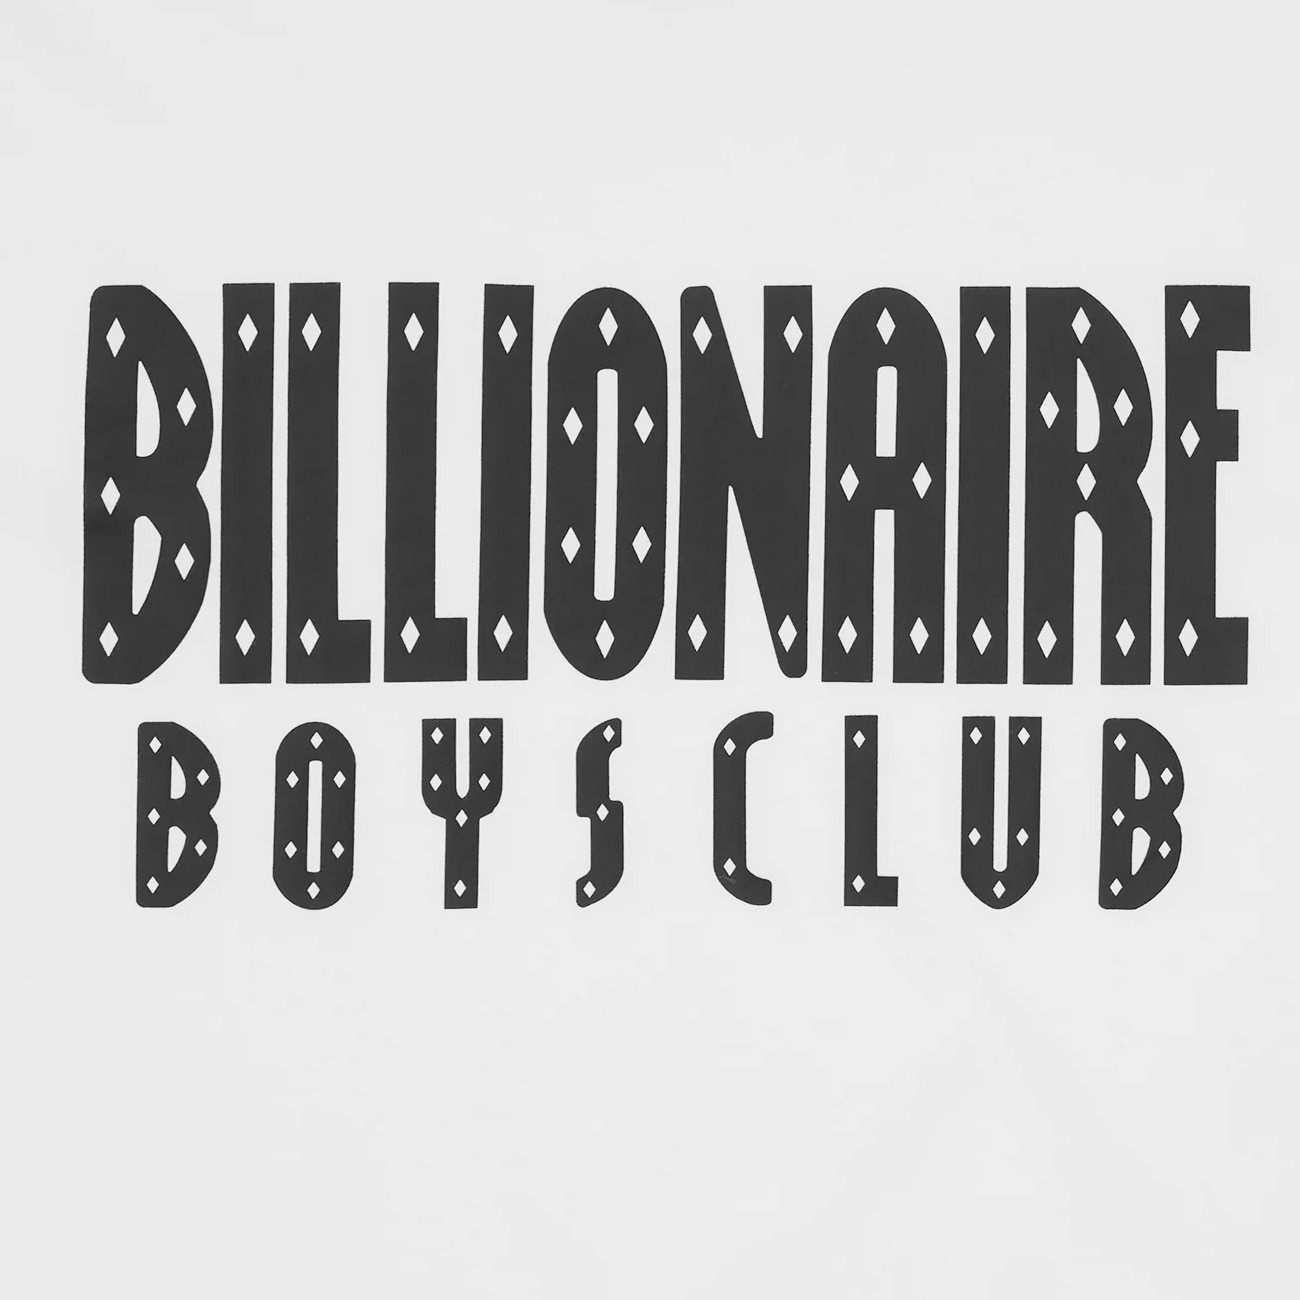 Billionaire Boys Club Straight Logo T-Shirt White